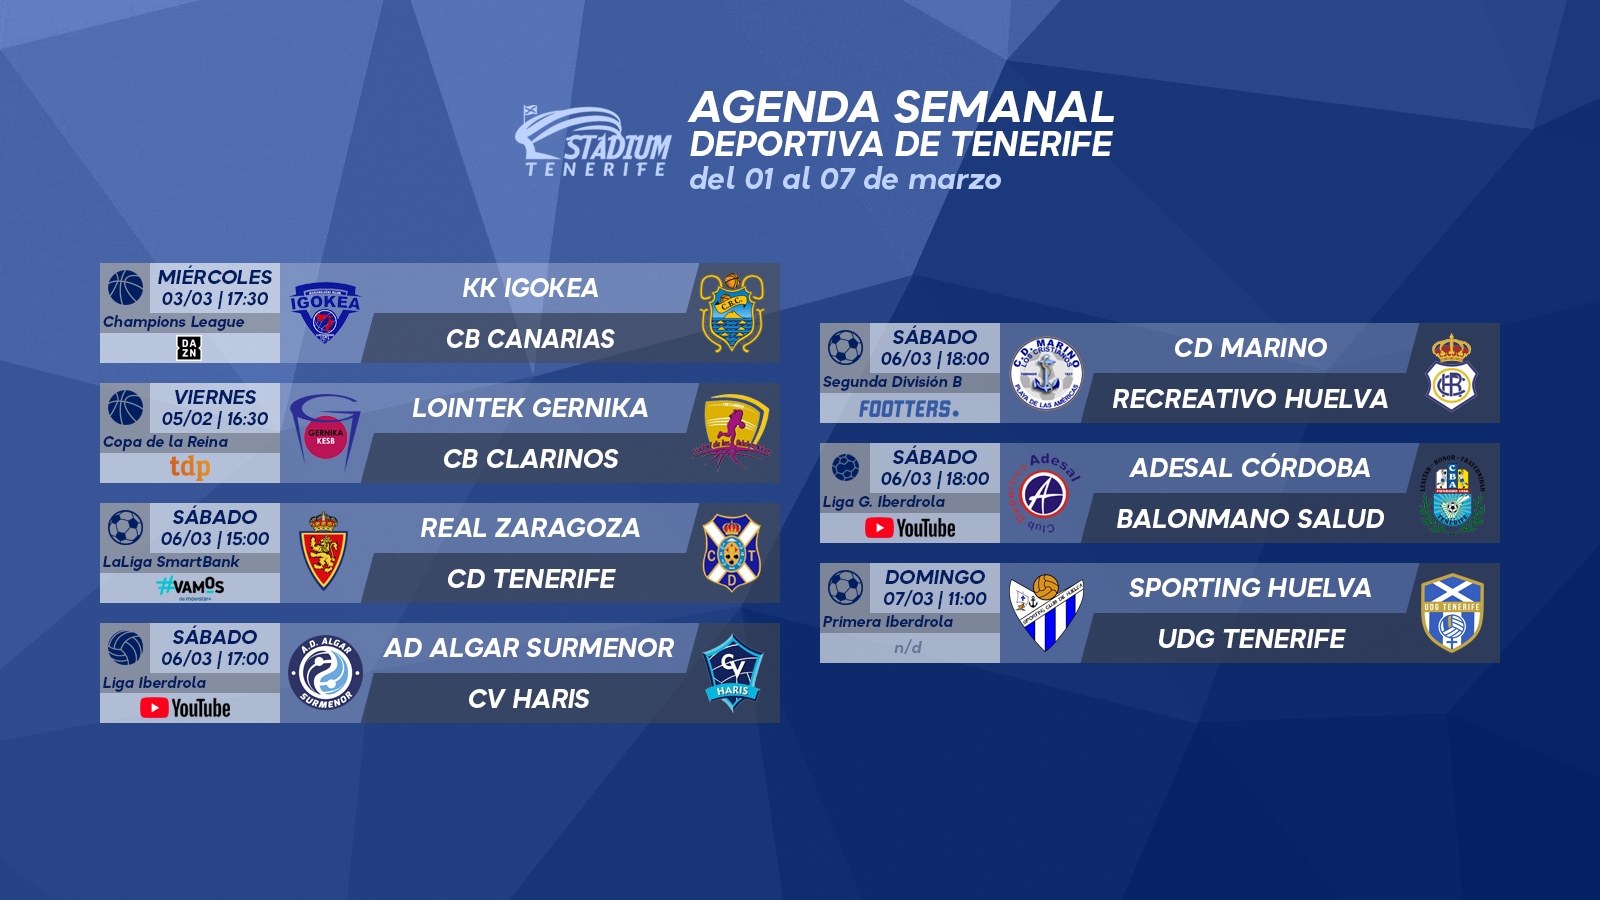 Agenda Semanal Deportiva de Tenerife (1 al 7 de marzo)